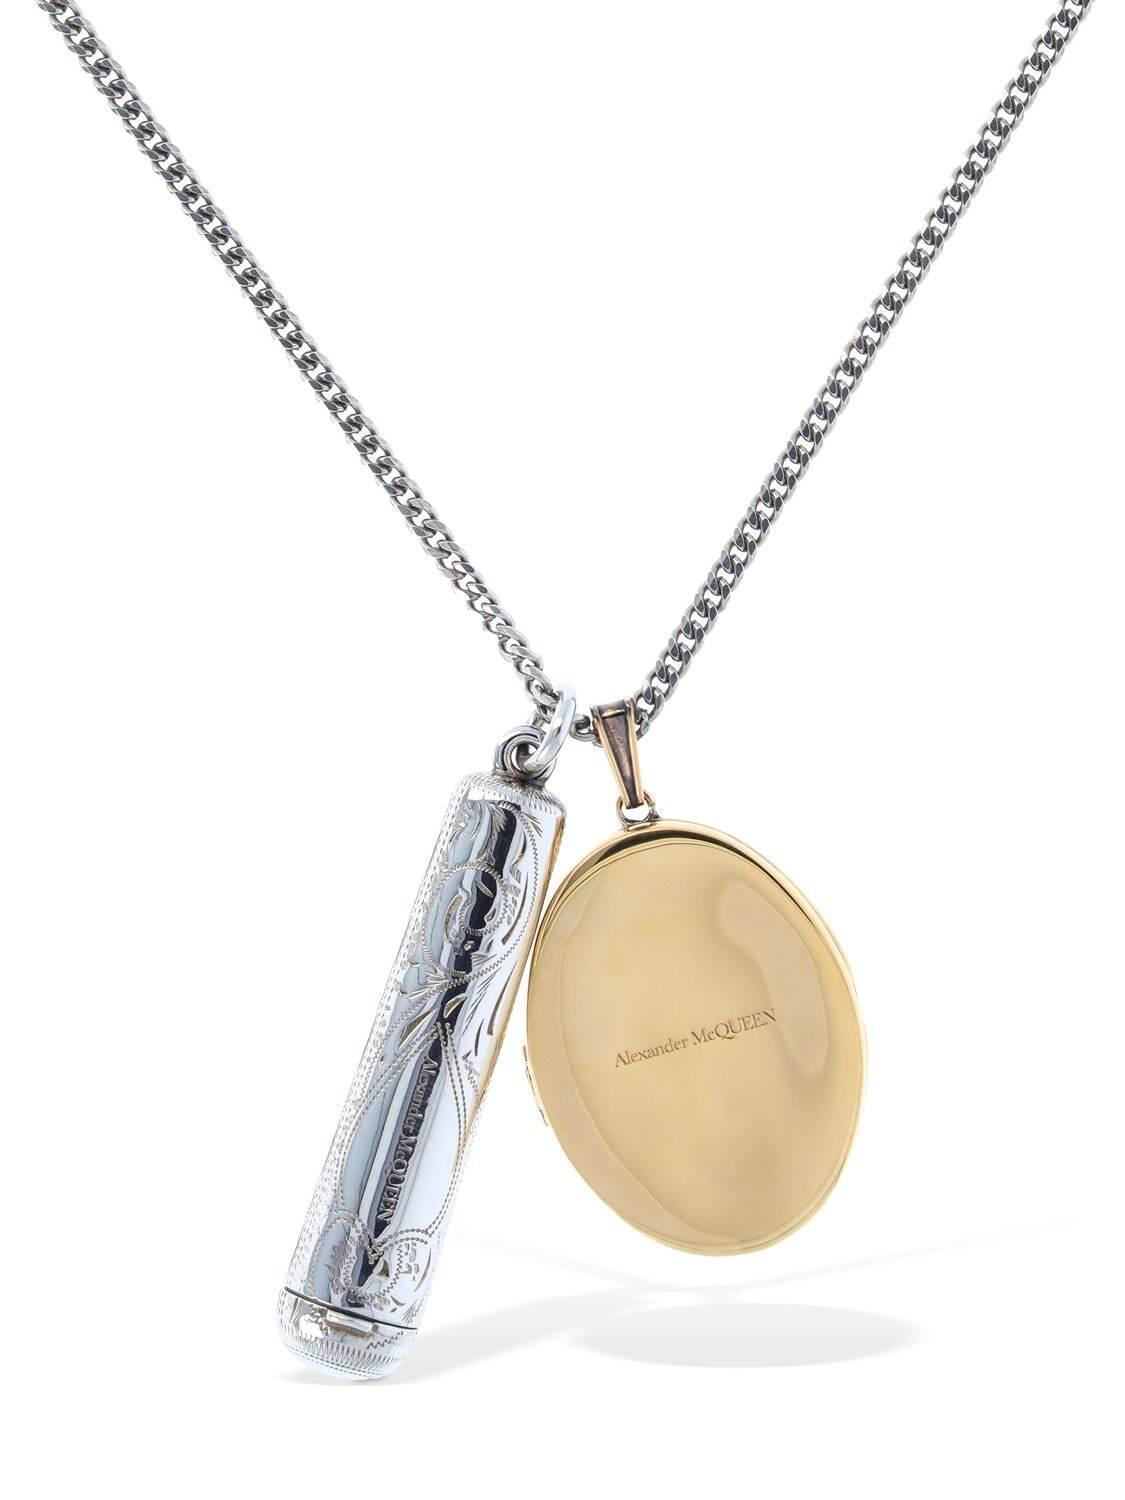 ALEXANDER MCQUEEN Wrap Chain Brass Necklace in gold / silver